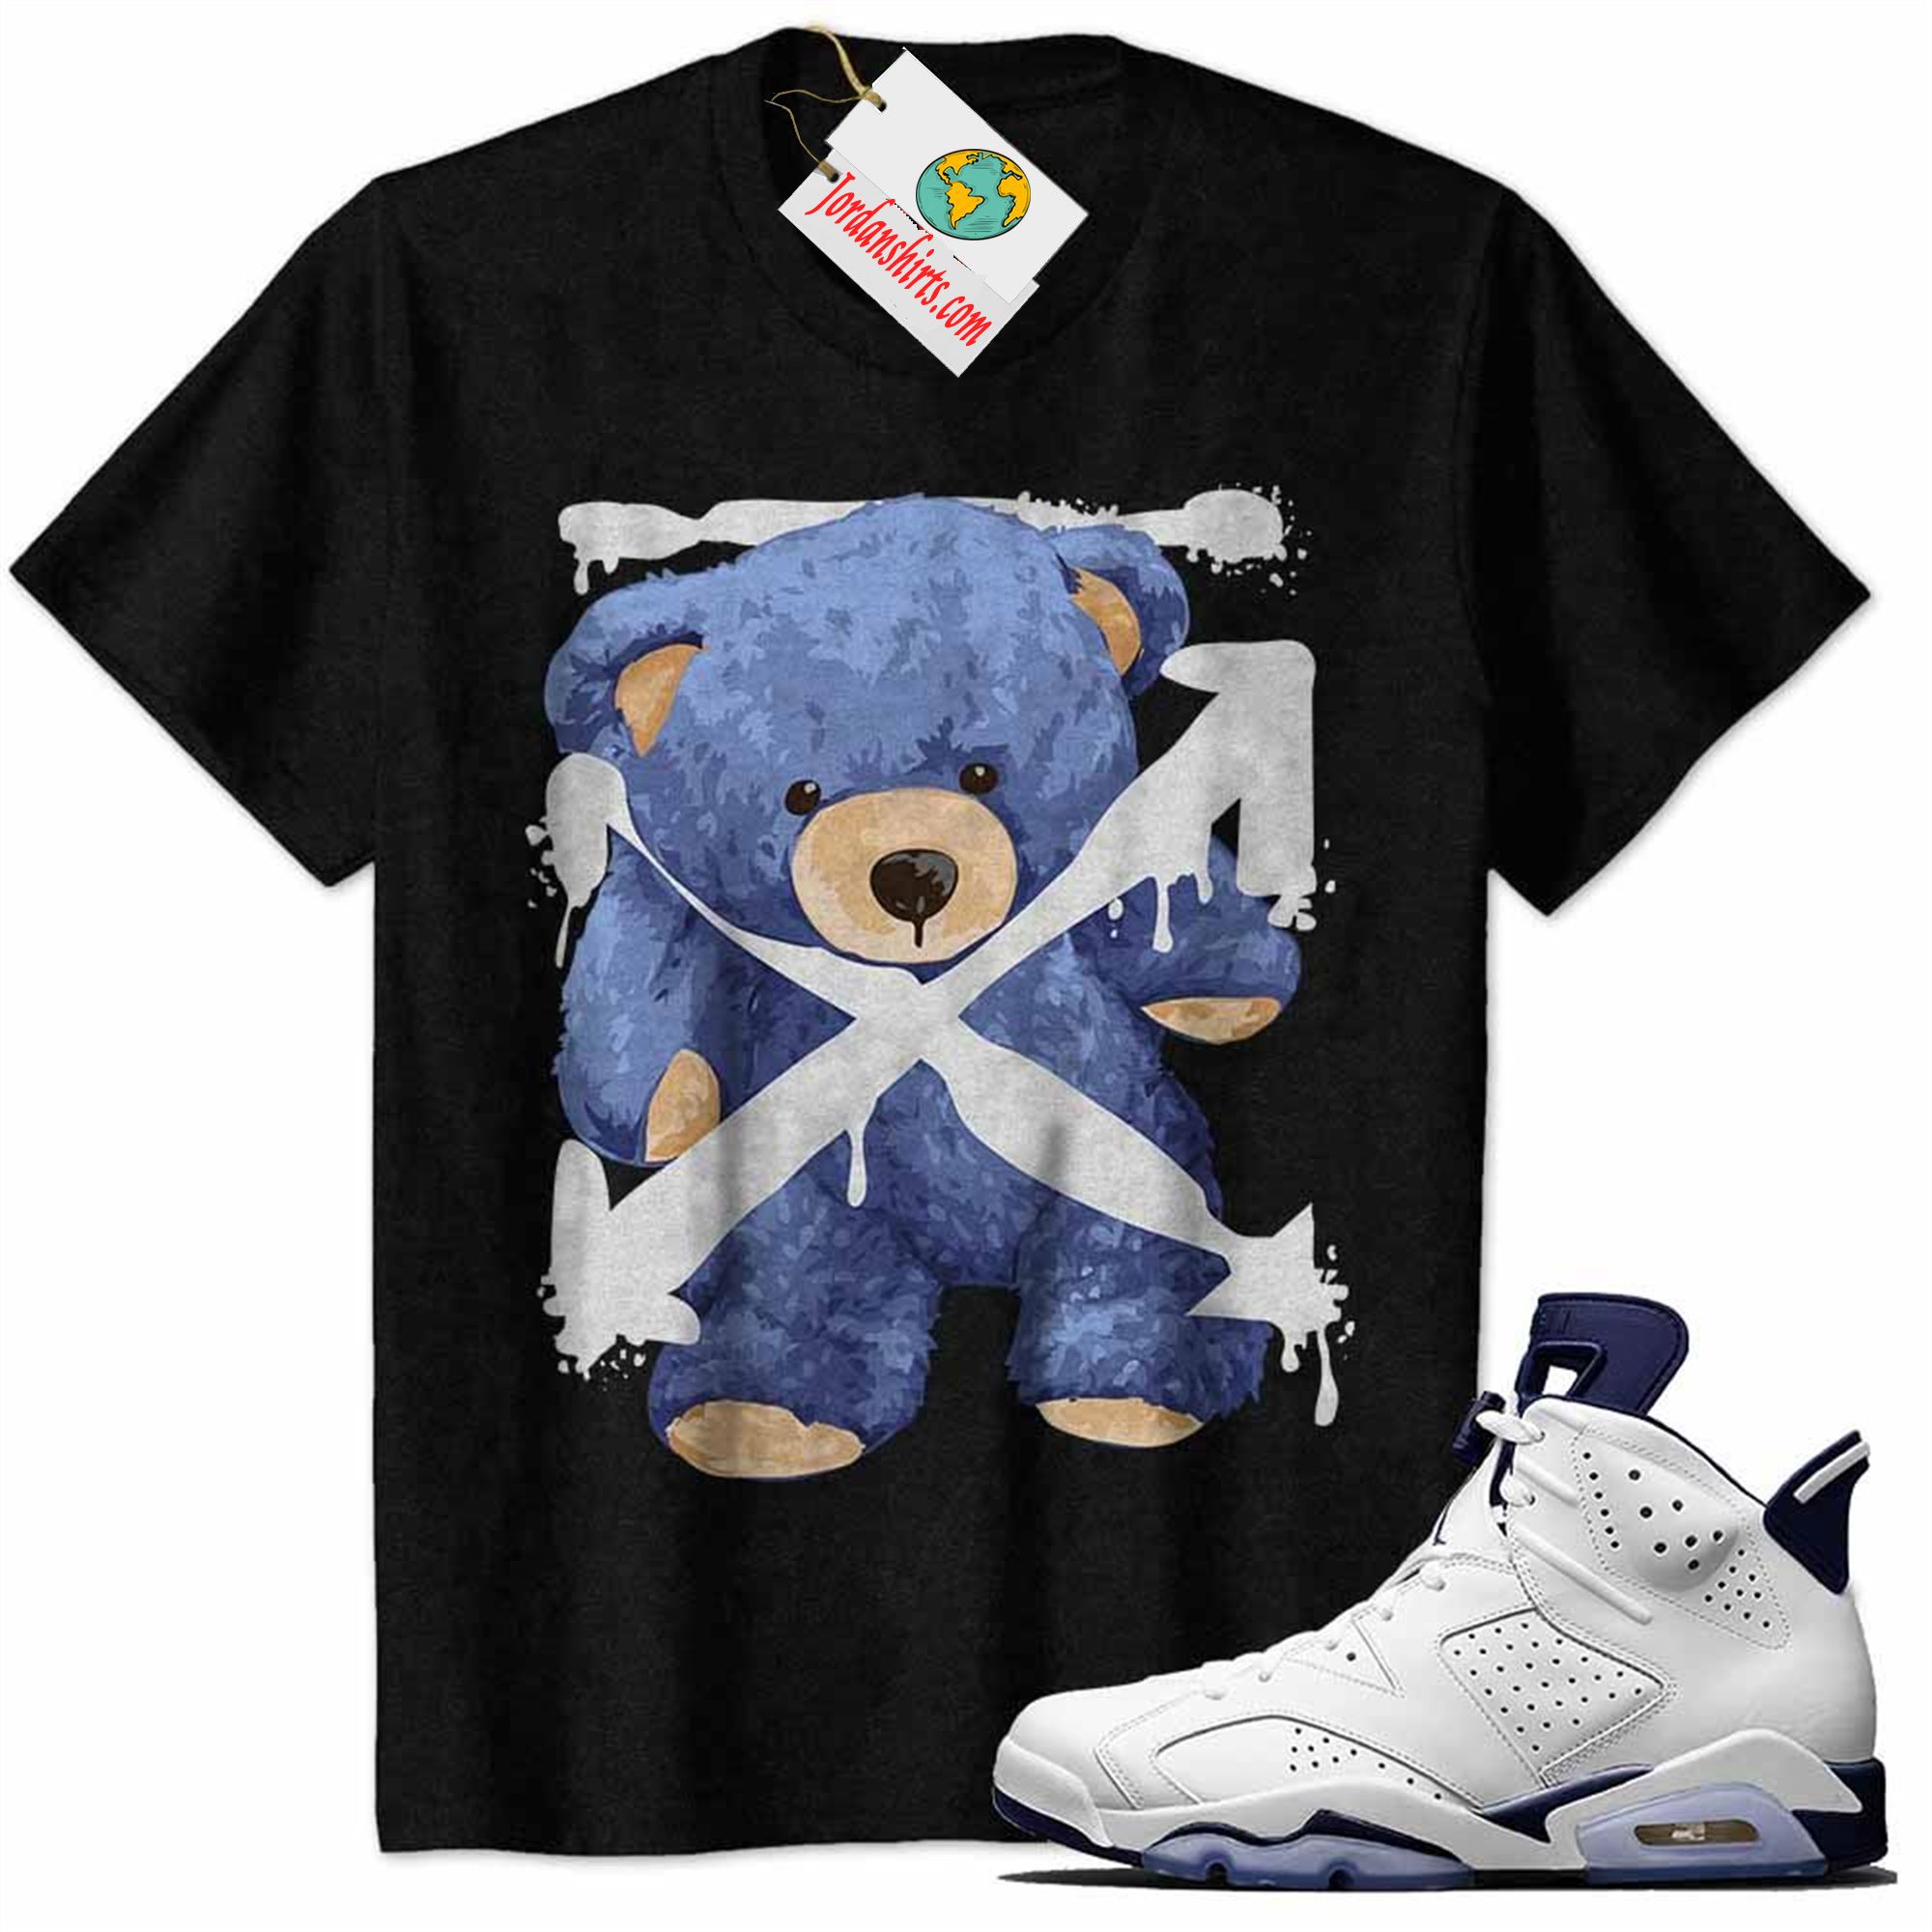 Jordan 6 Shirt, Teddy Bear Off White Paint Dripping Black Air Jordan 6 Midnight Navy 6s Full Size Up To 5xl